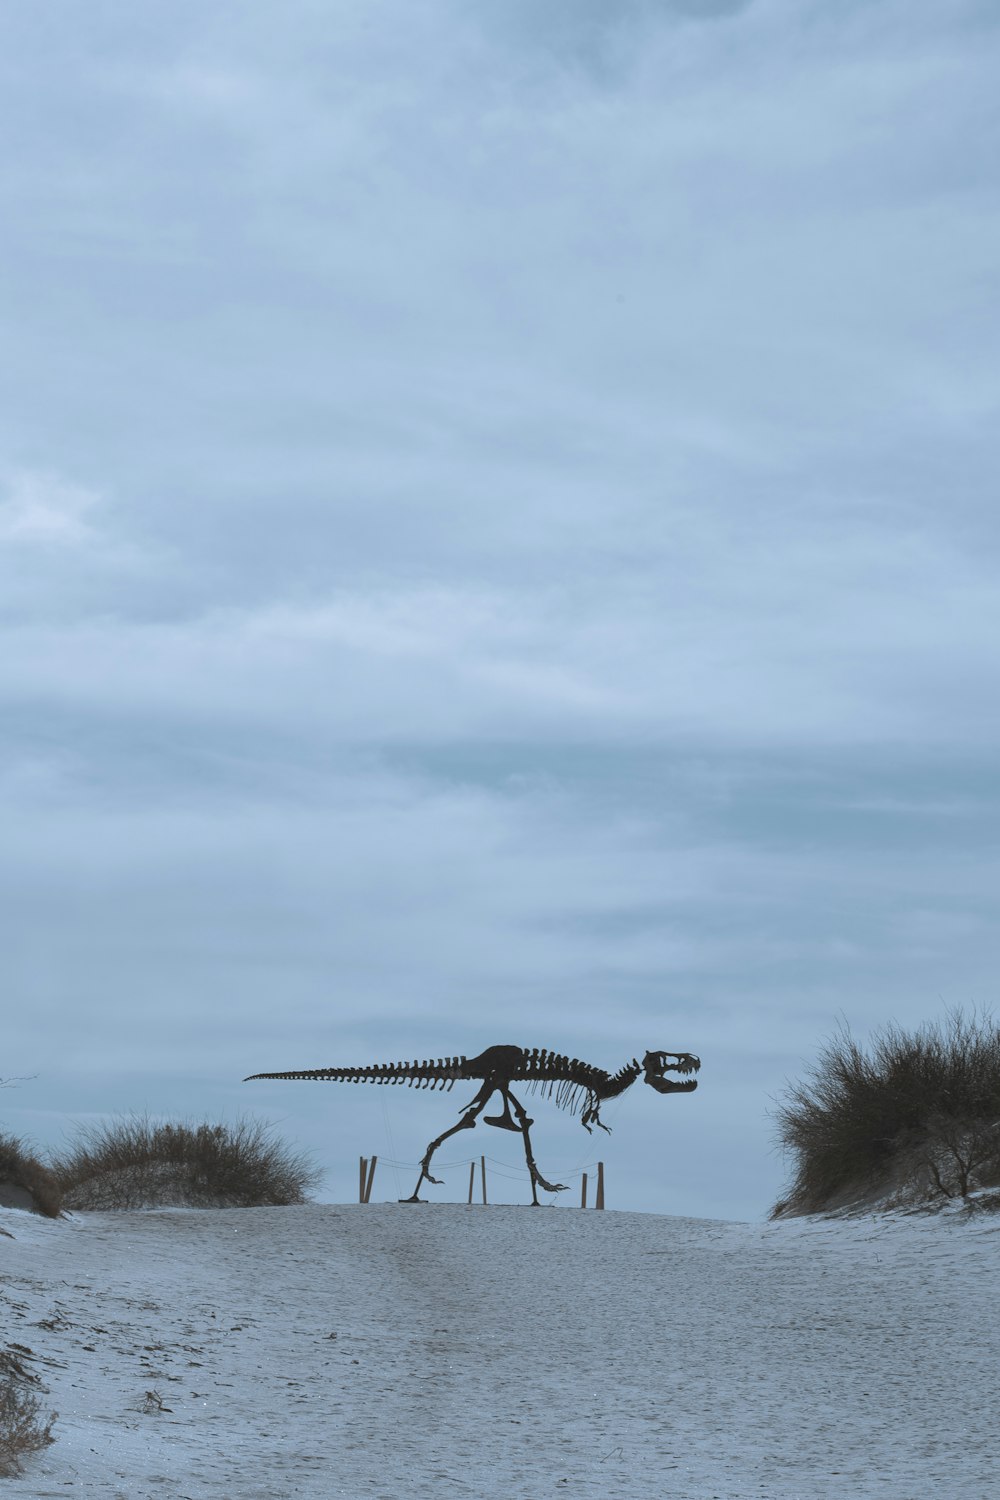 a sculpture of a dinosaur on a beach